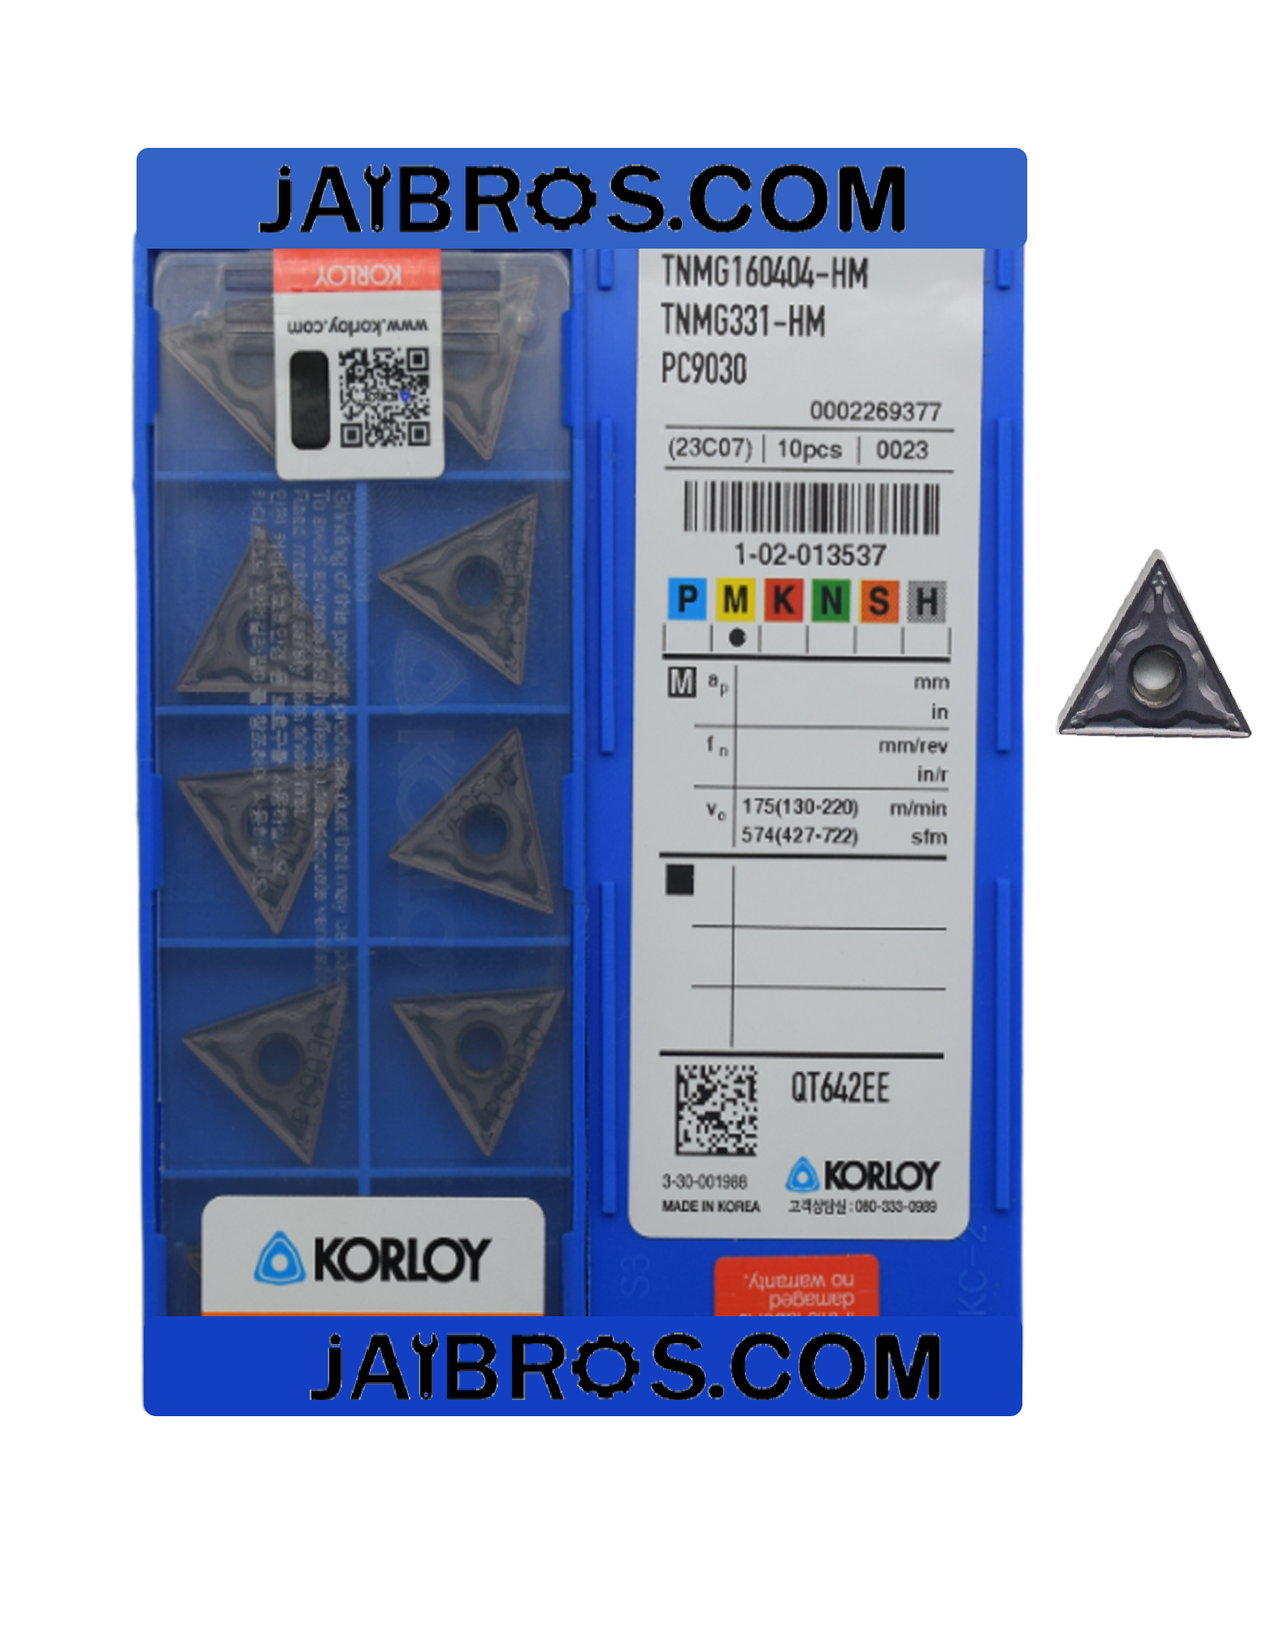 Korloy TNMG160404/08 HM PC9030 carbide insert ss grade pack of 10